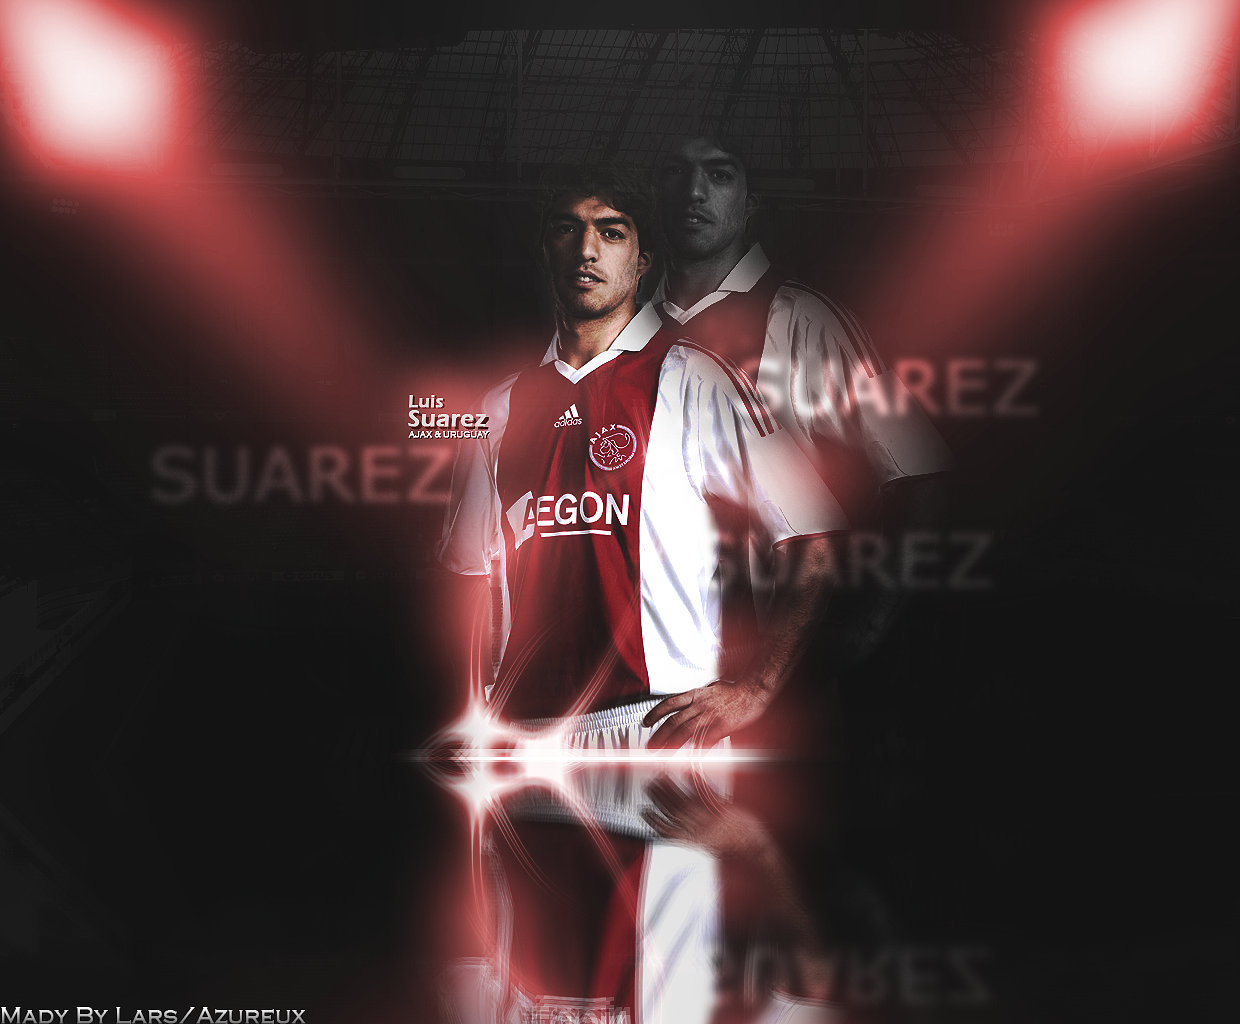 Luis Suarez Wallpapers | Football Wallpapers Football Players ...